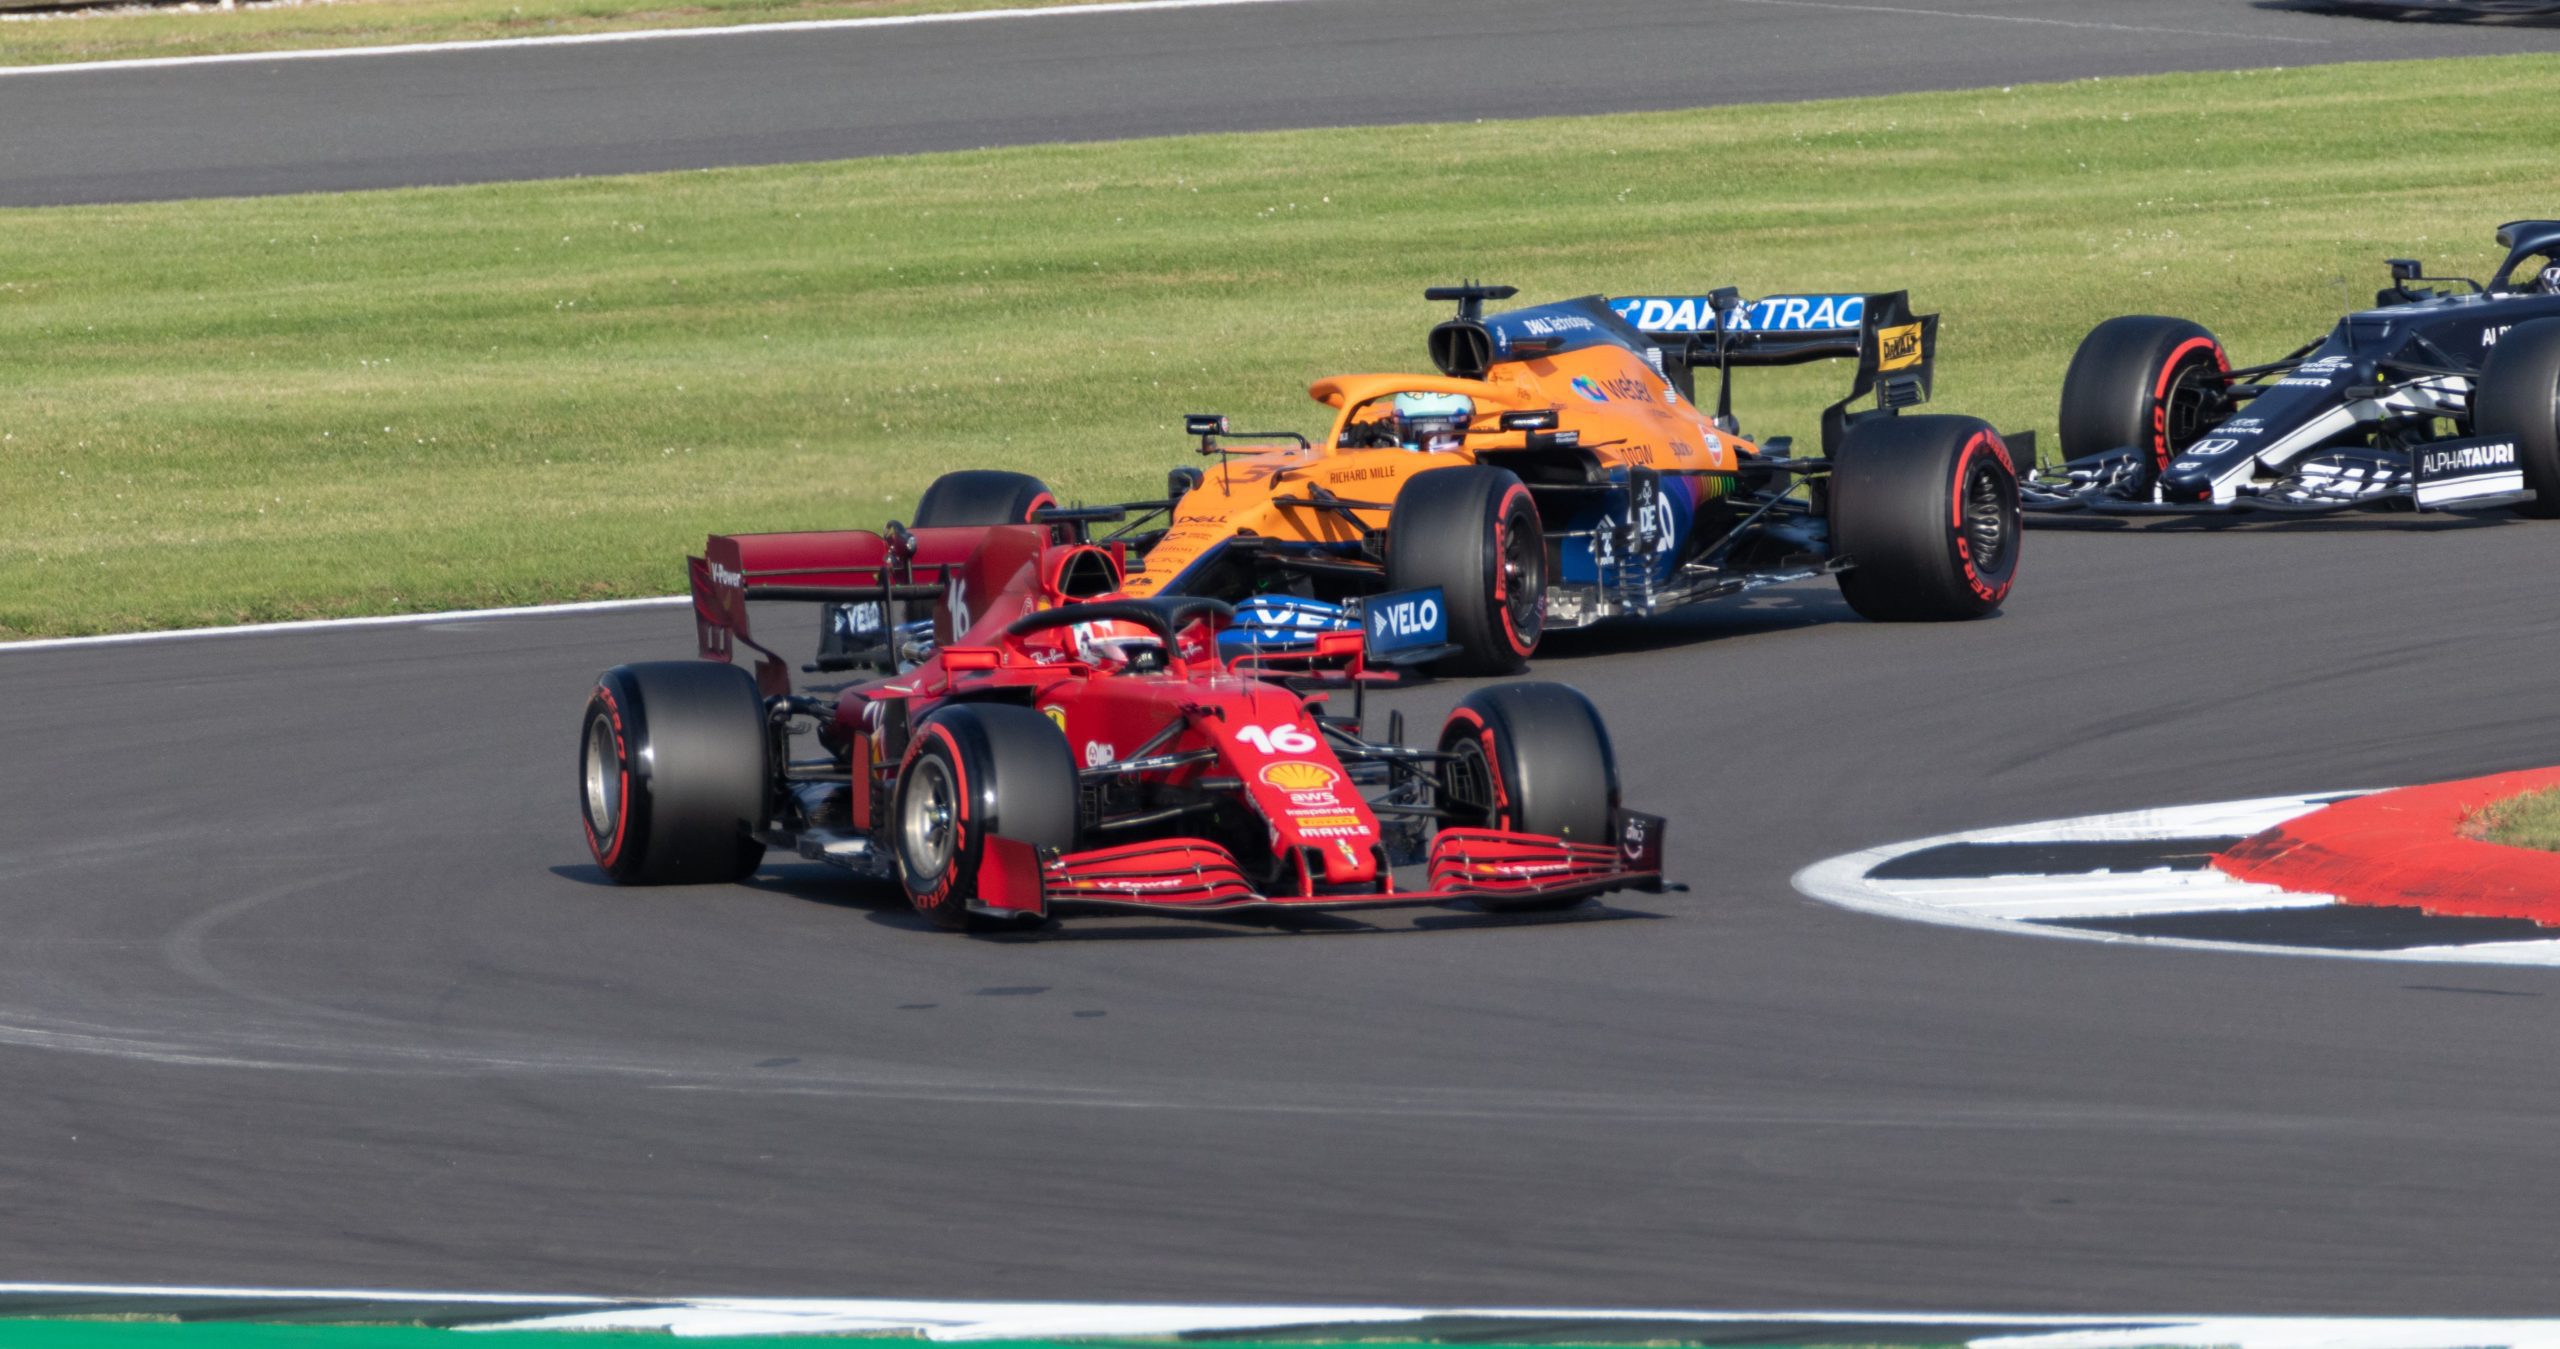 Ferrari Formula 1 car racing during the 2021 British Grand Prix.